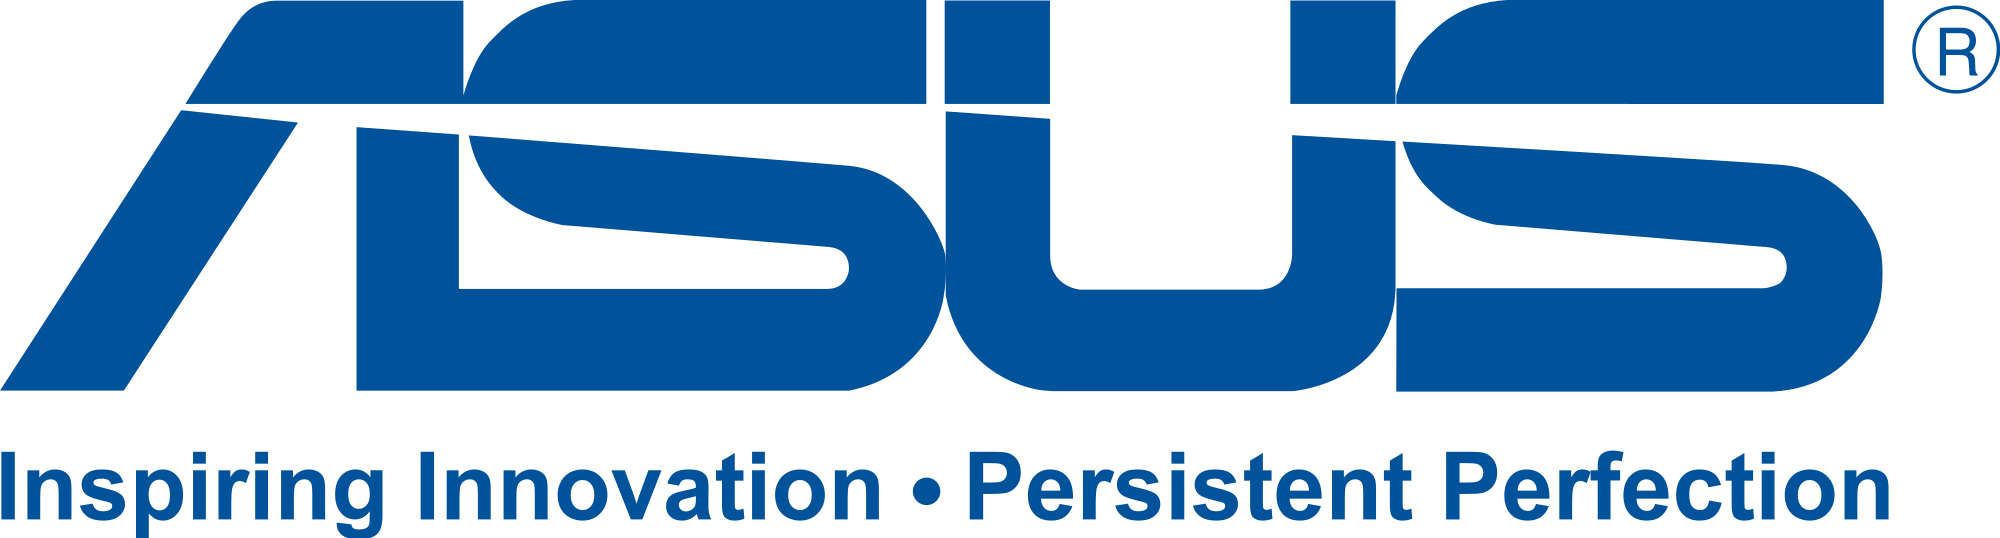 Asus Logo - File:ASUS Corporate Logo.svg - Wikimedia Commons